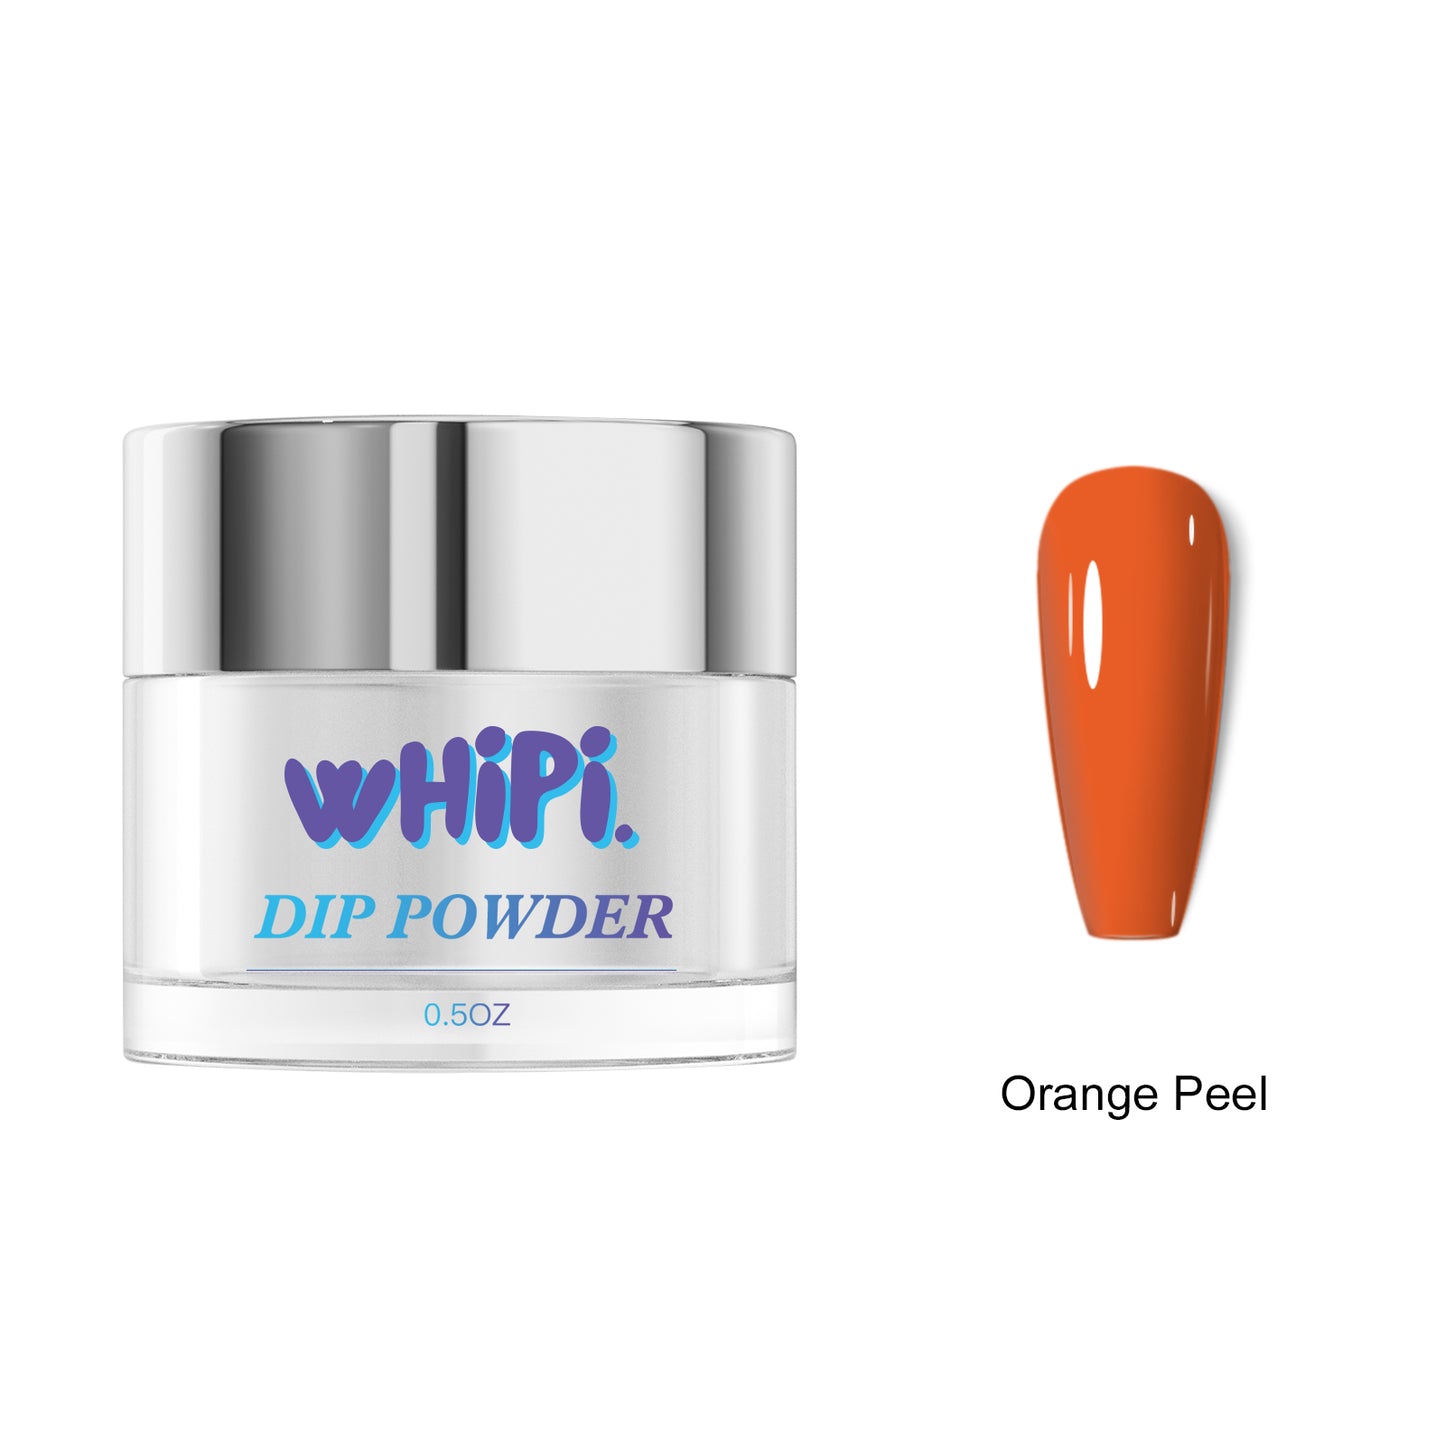 Orange Peel Dip Powder